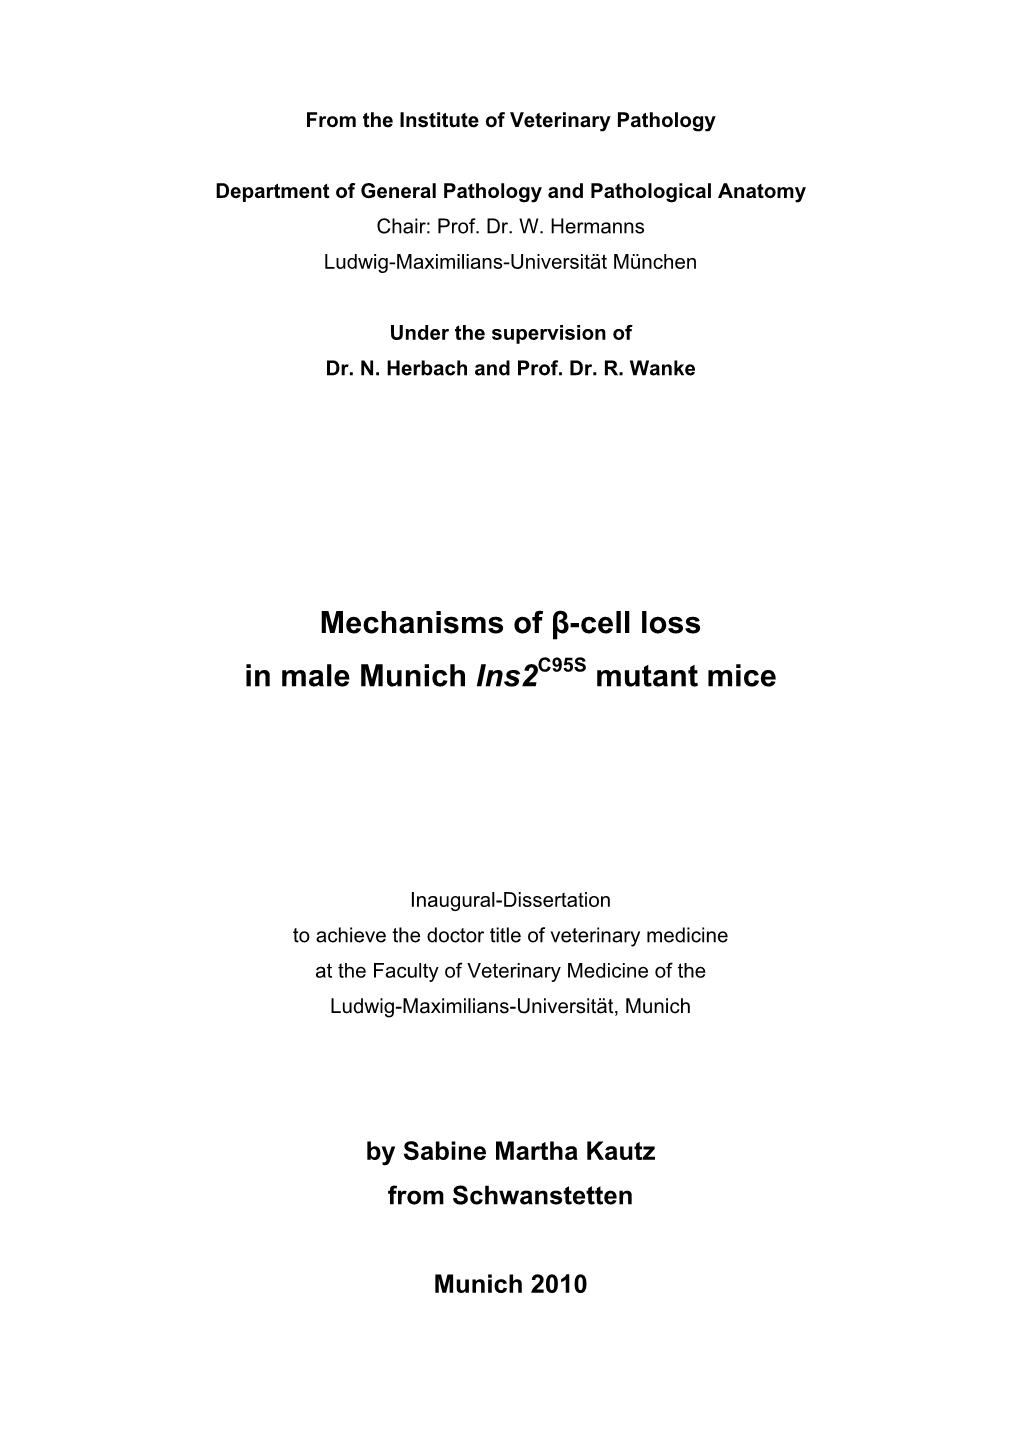 Mechanisms of ß-Cell Loss in Male Munich Ins2c95s Mutant Mice